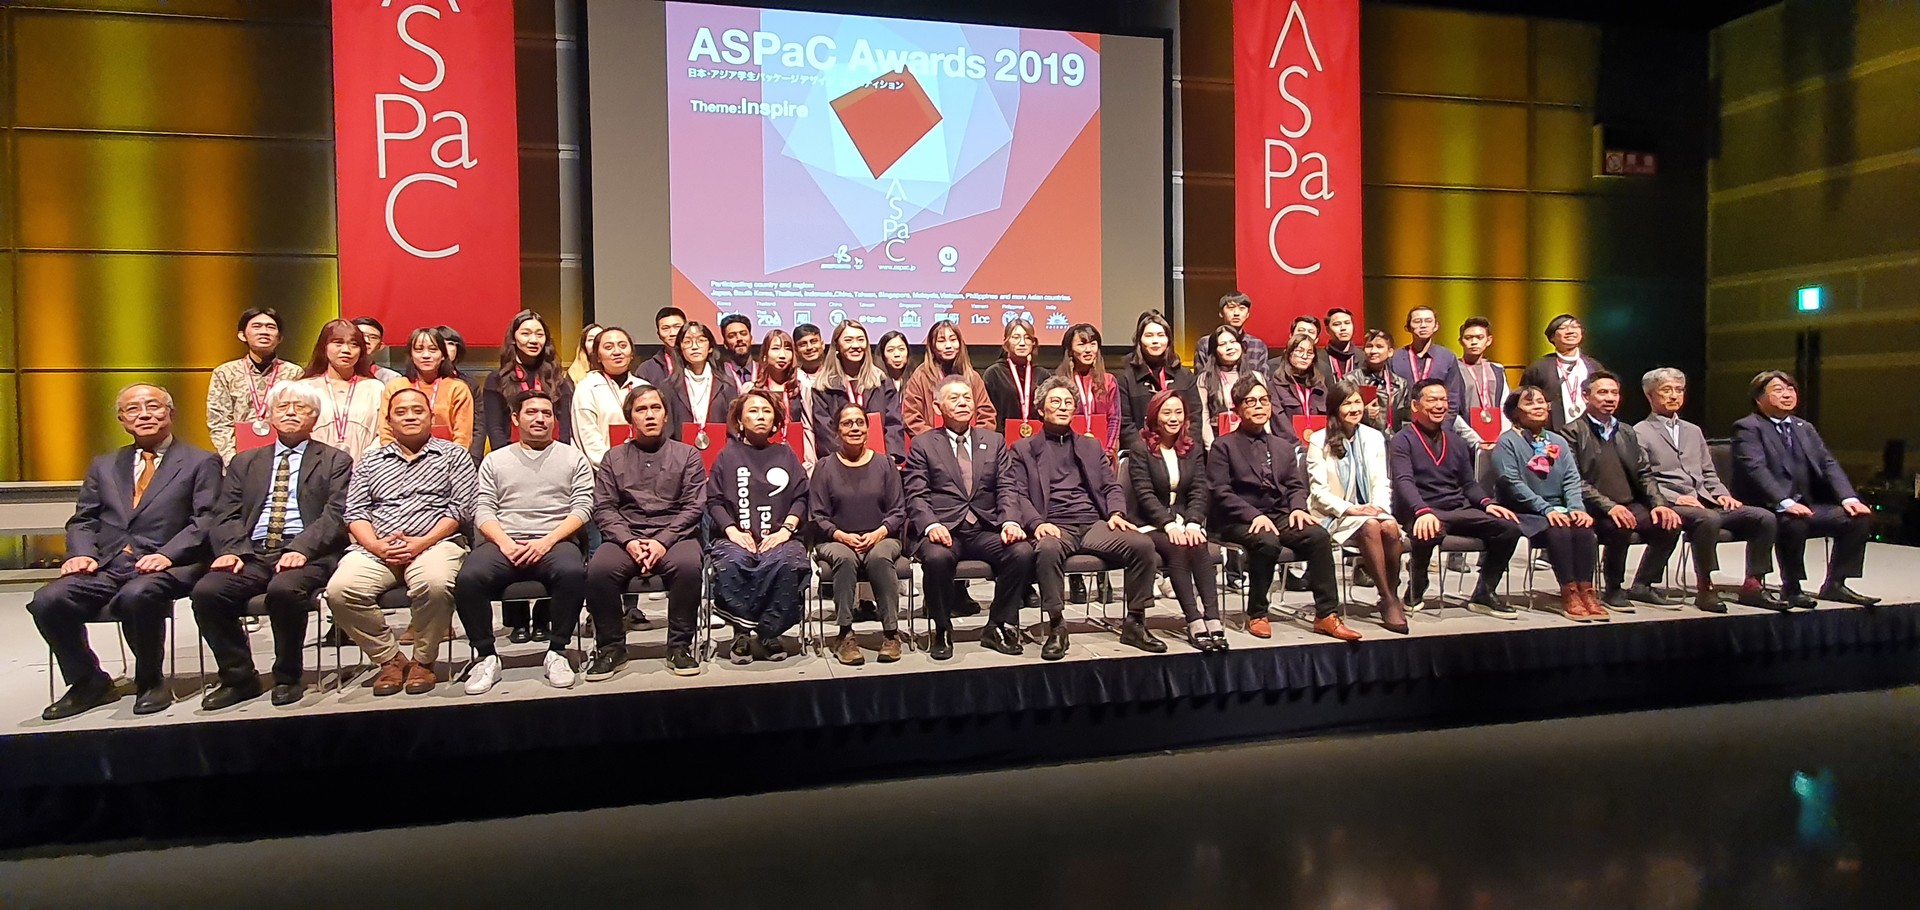 ASPaC Awards 2019